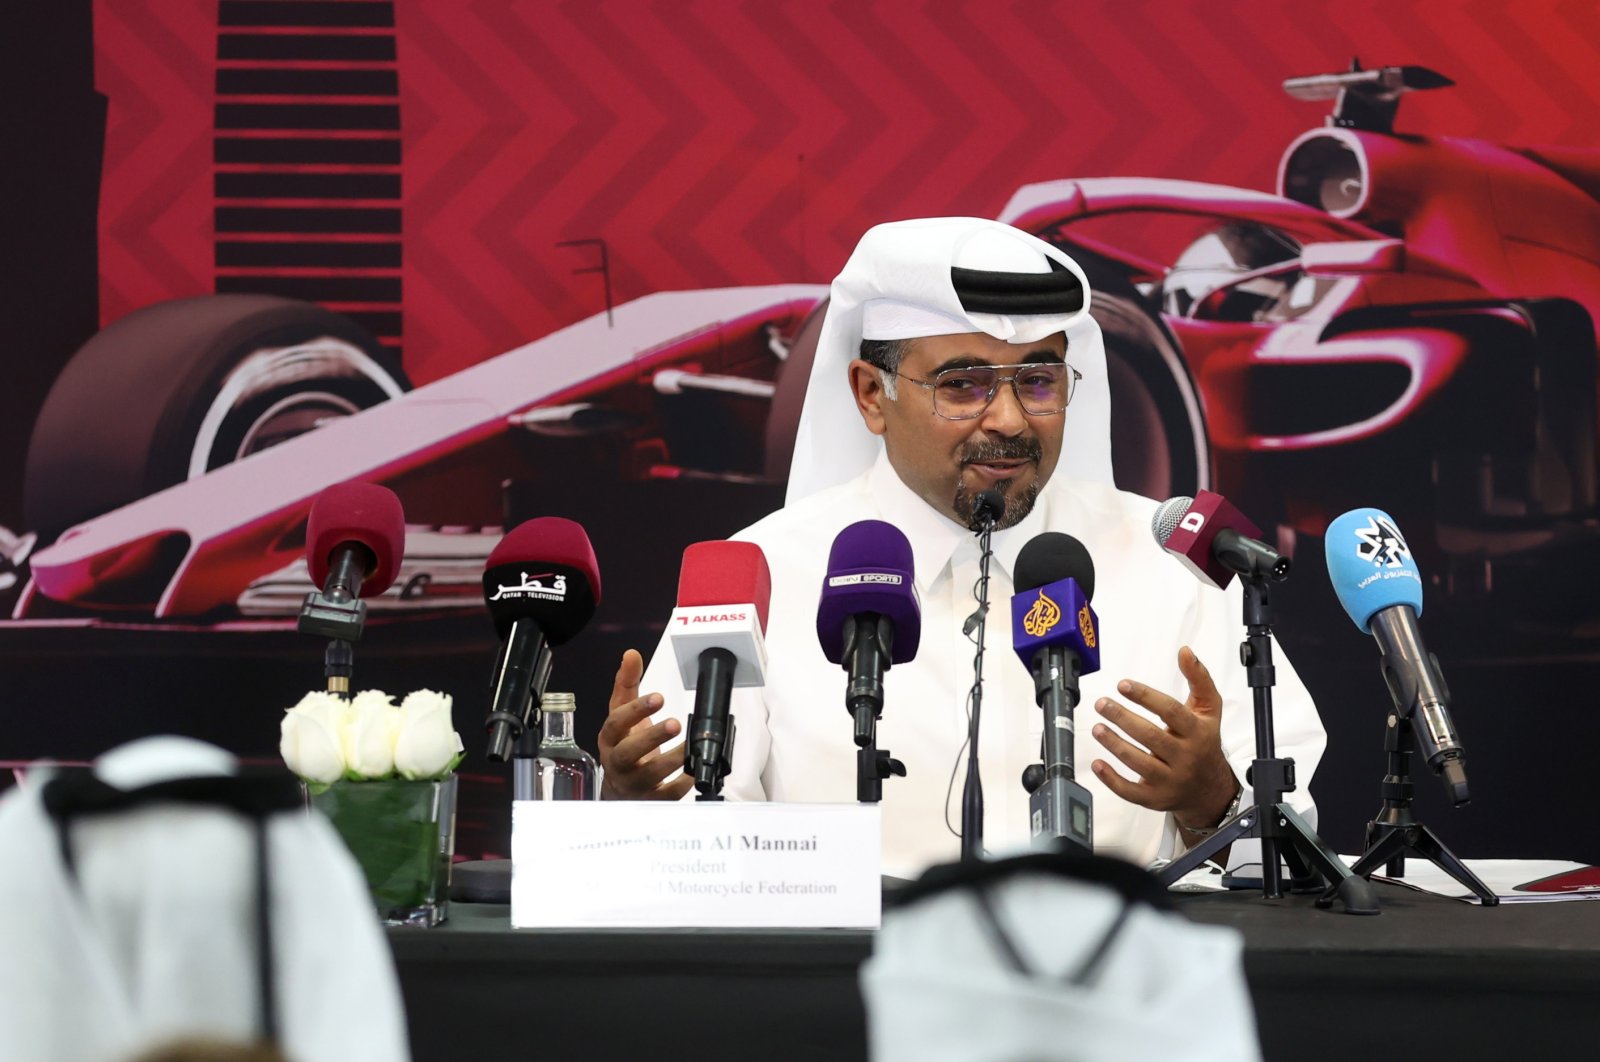 Qatar Motor and Motorcycle Federation President Abdulrahman al-Mannai speaks at a press conference to announce the Formula One Qatar Grand Prix, Qatar, Nov. 21, 2021. (Reuters Photo)